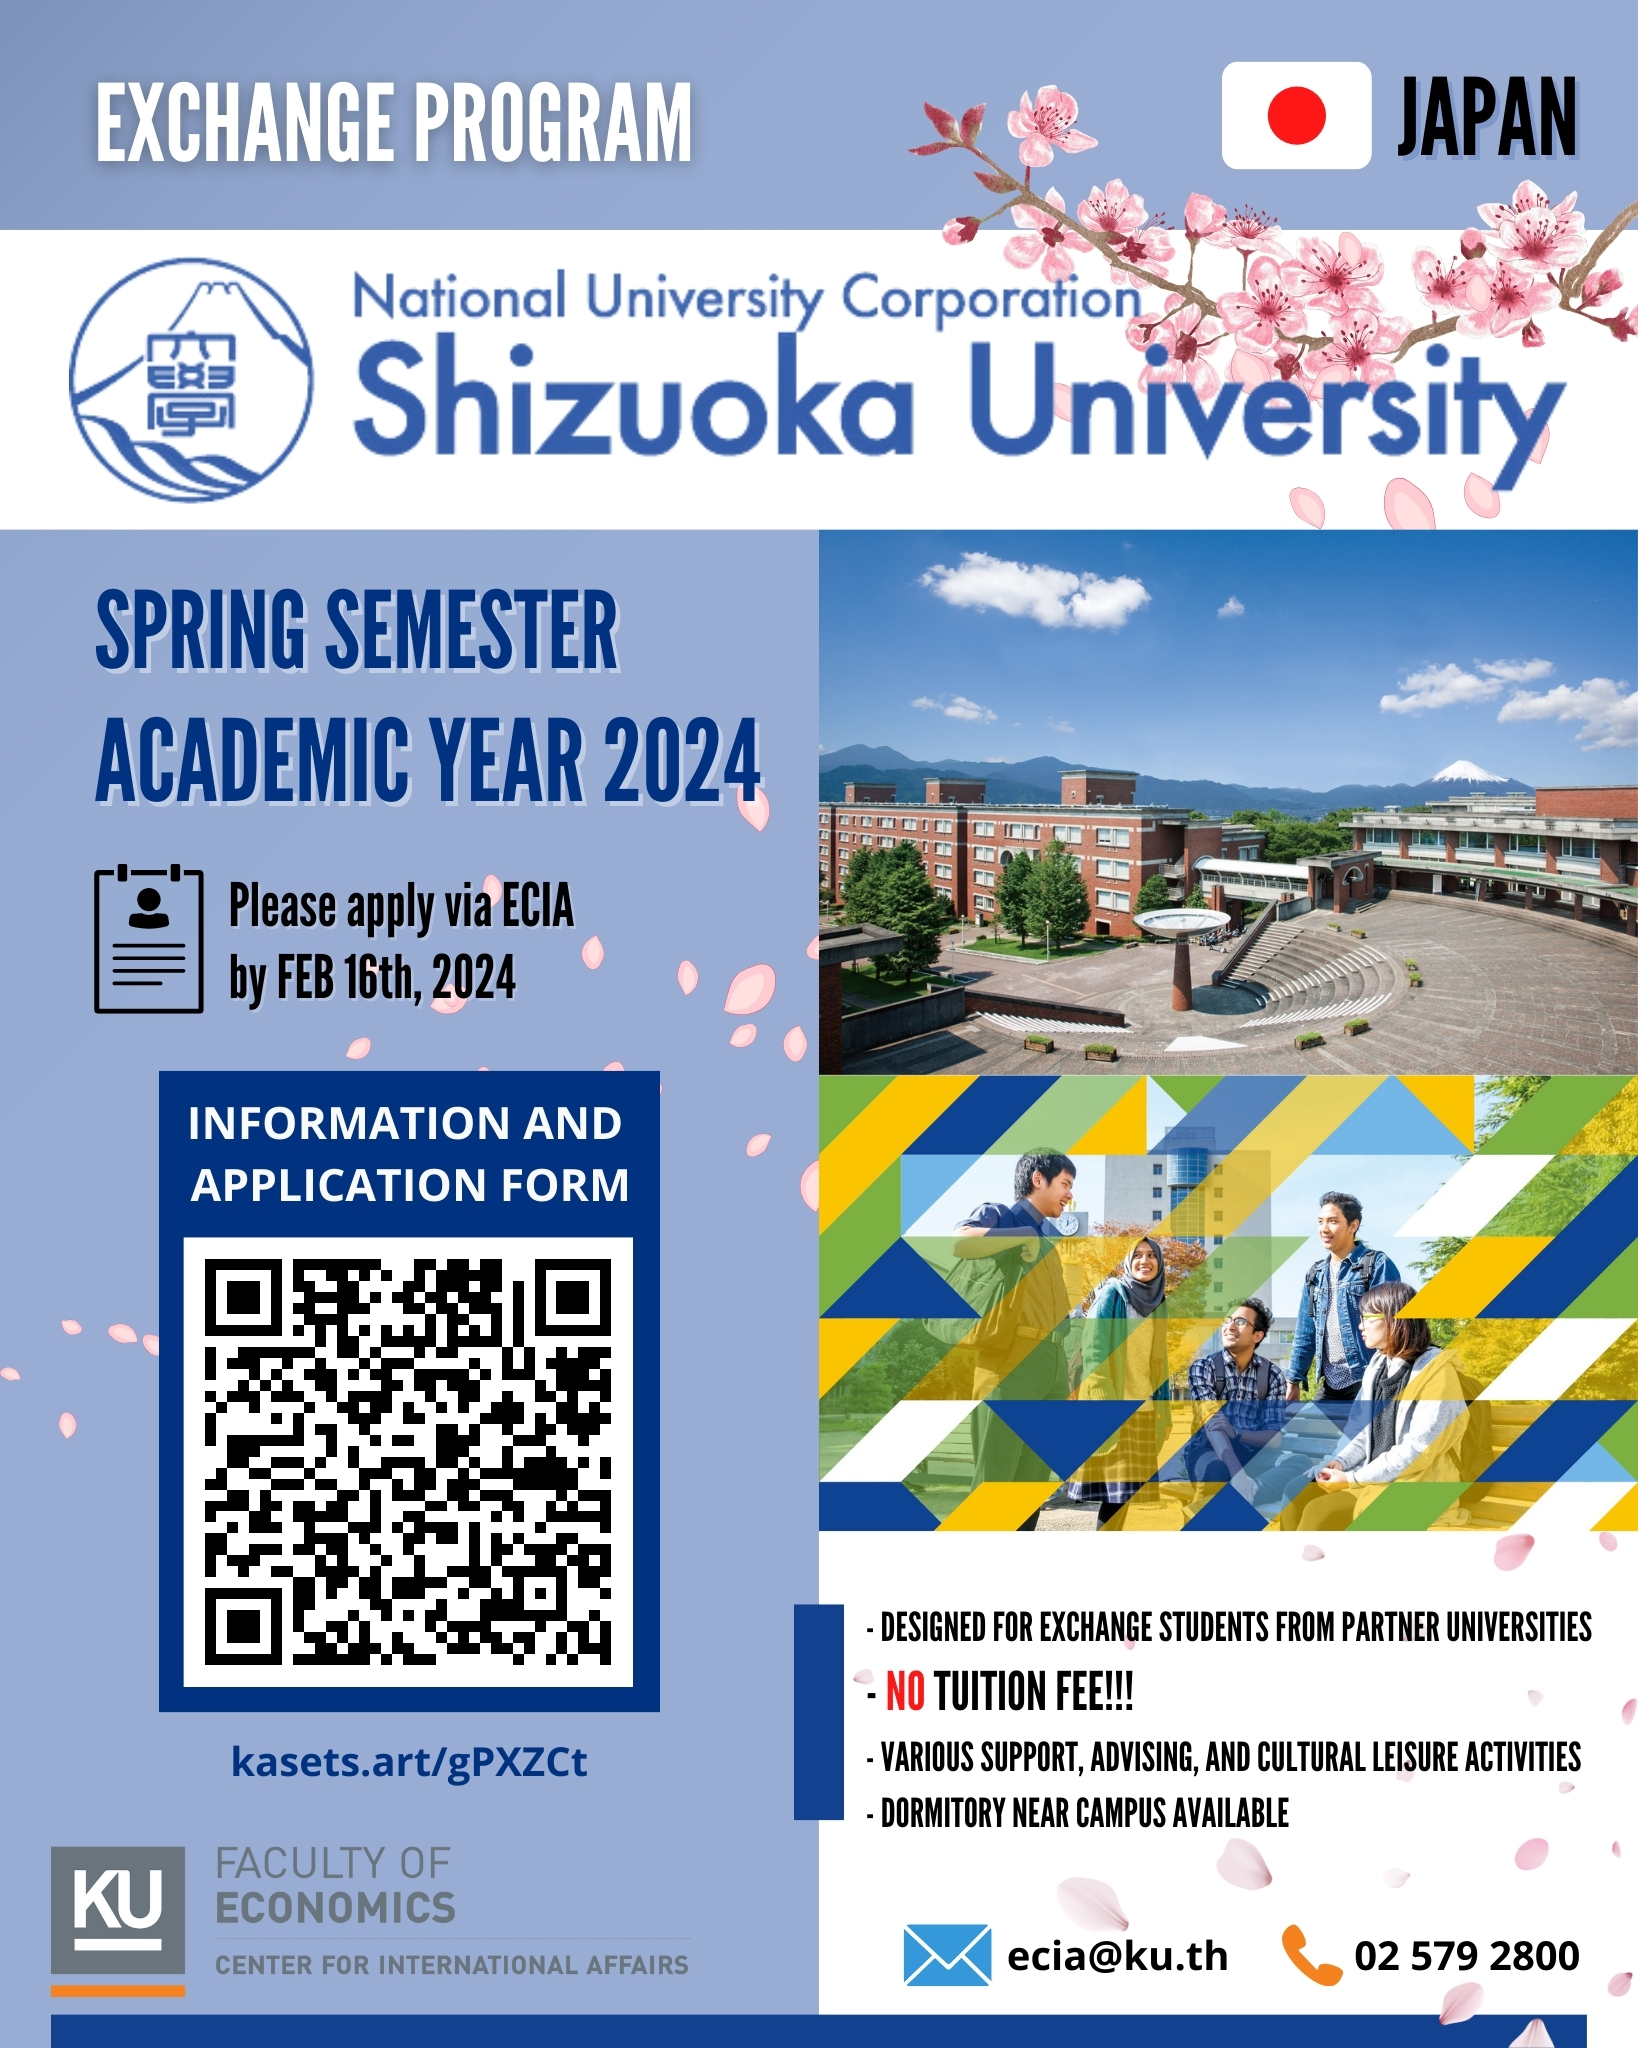 Exchange Program at Shizuoka University, JAPAN in Spring Semester 2024